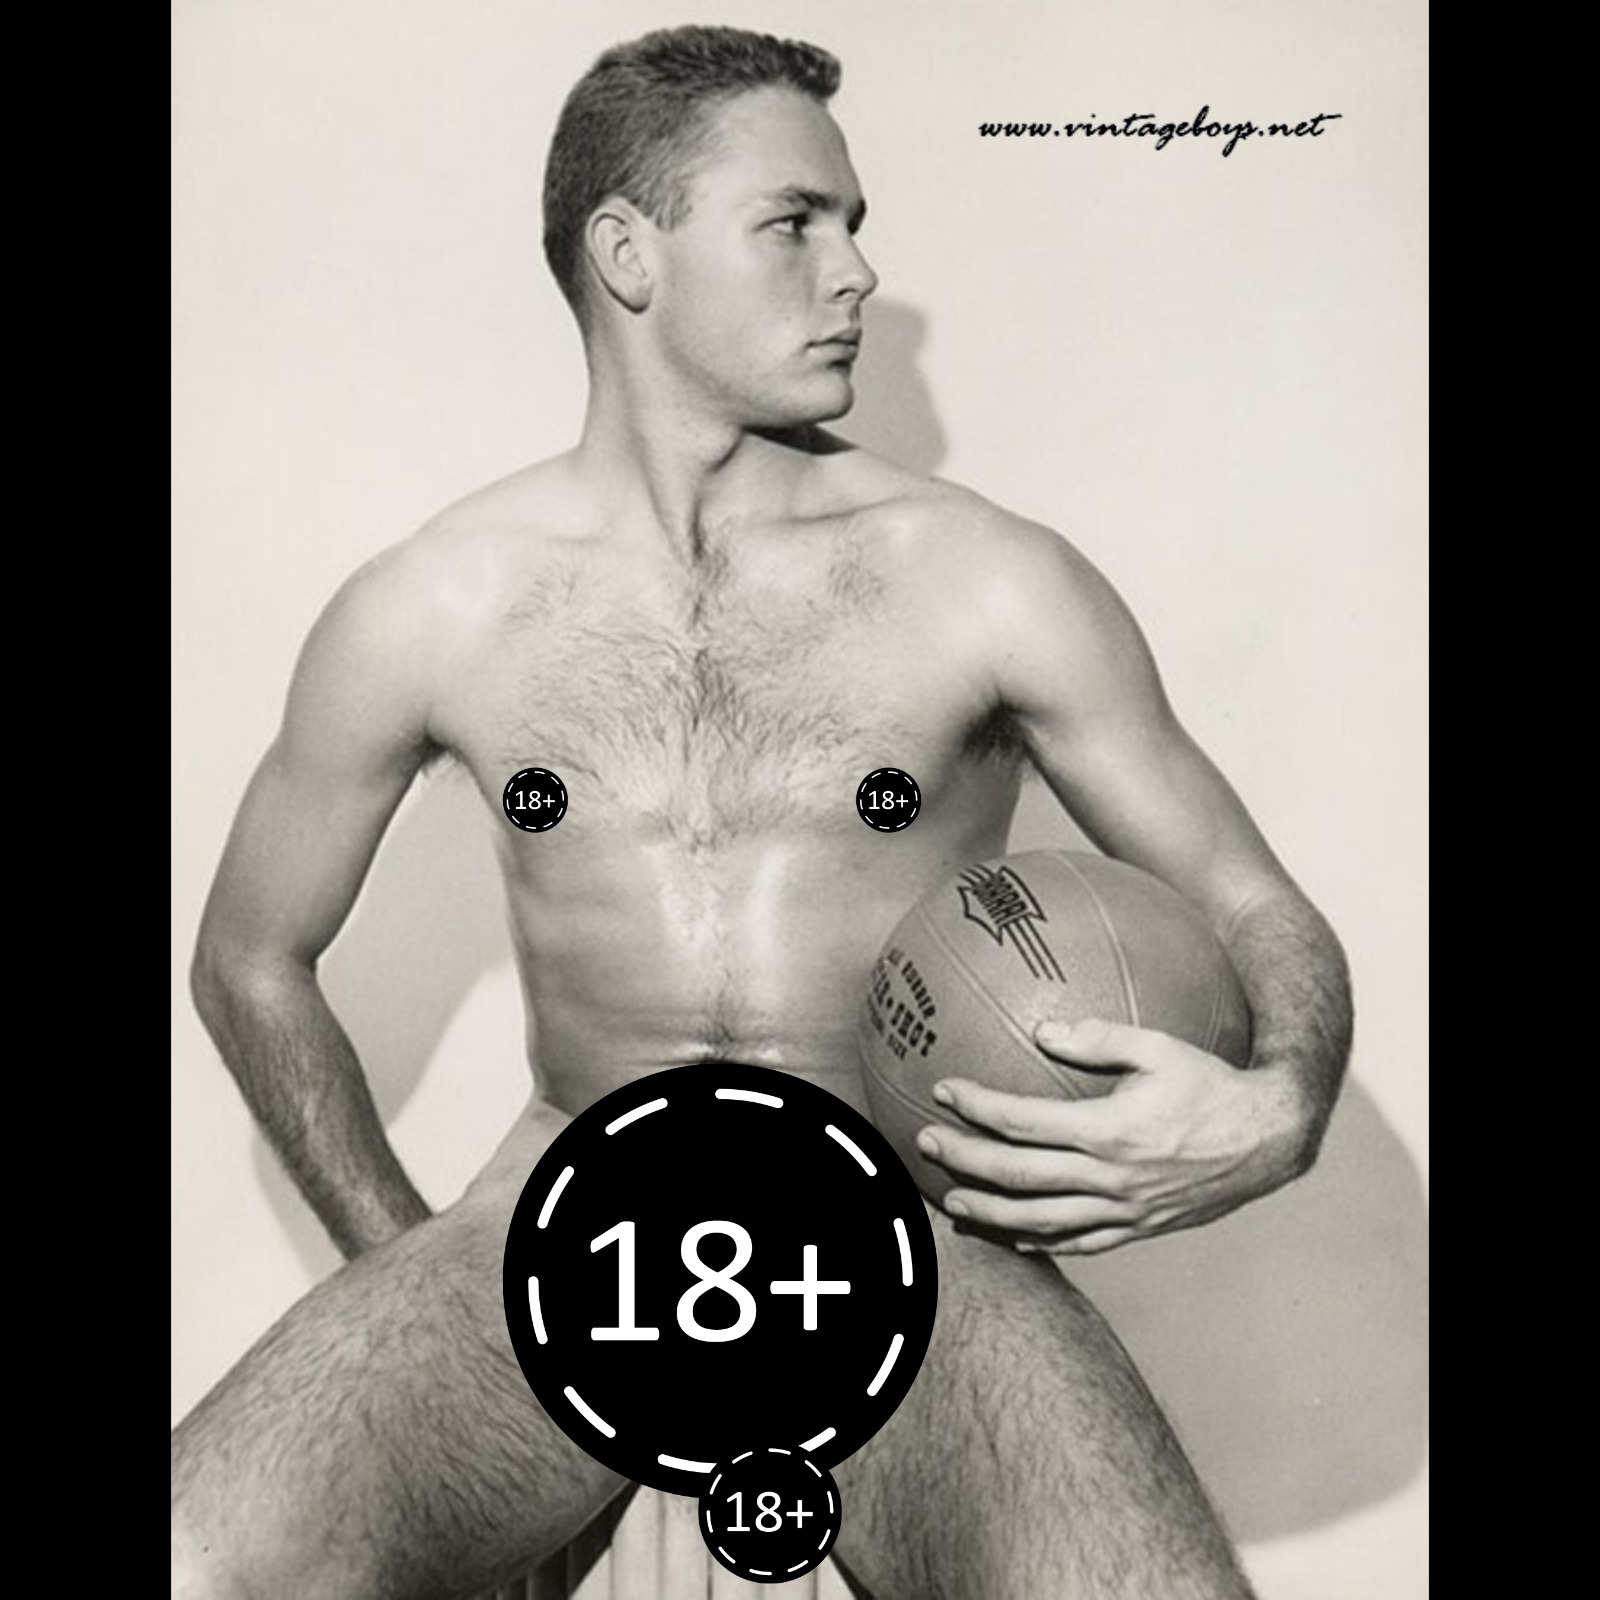 Vintage Male Nudity Erotica Digital Download x13 Photos Gay Interest 1950s